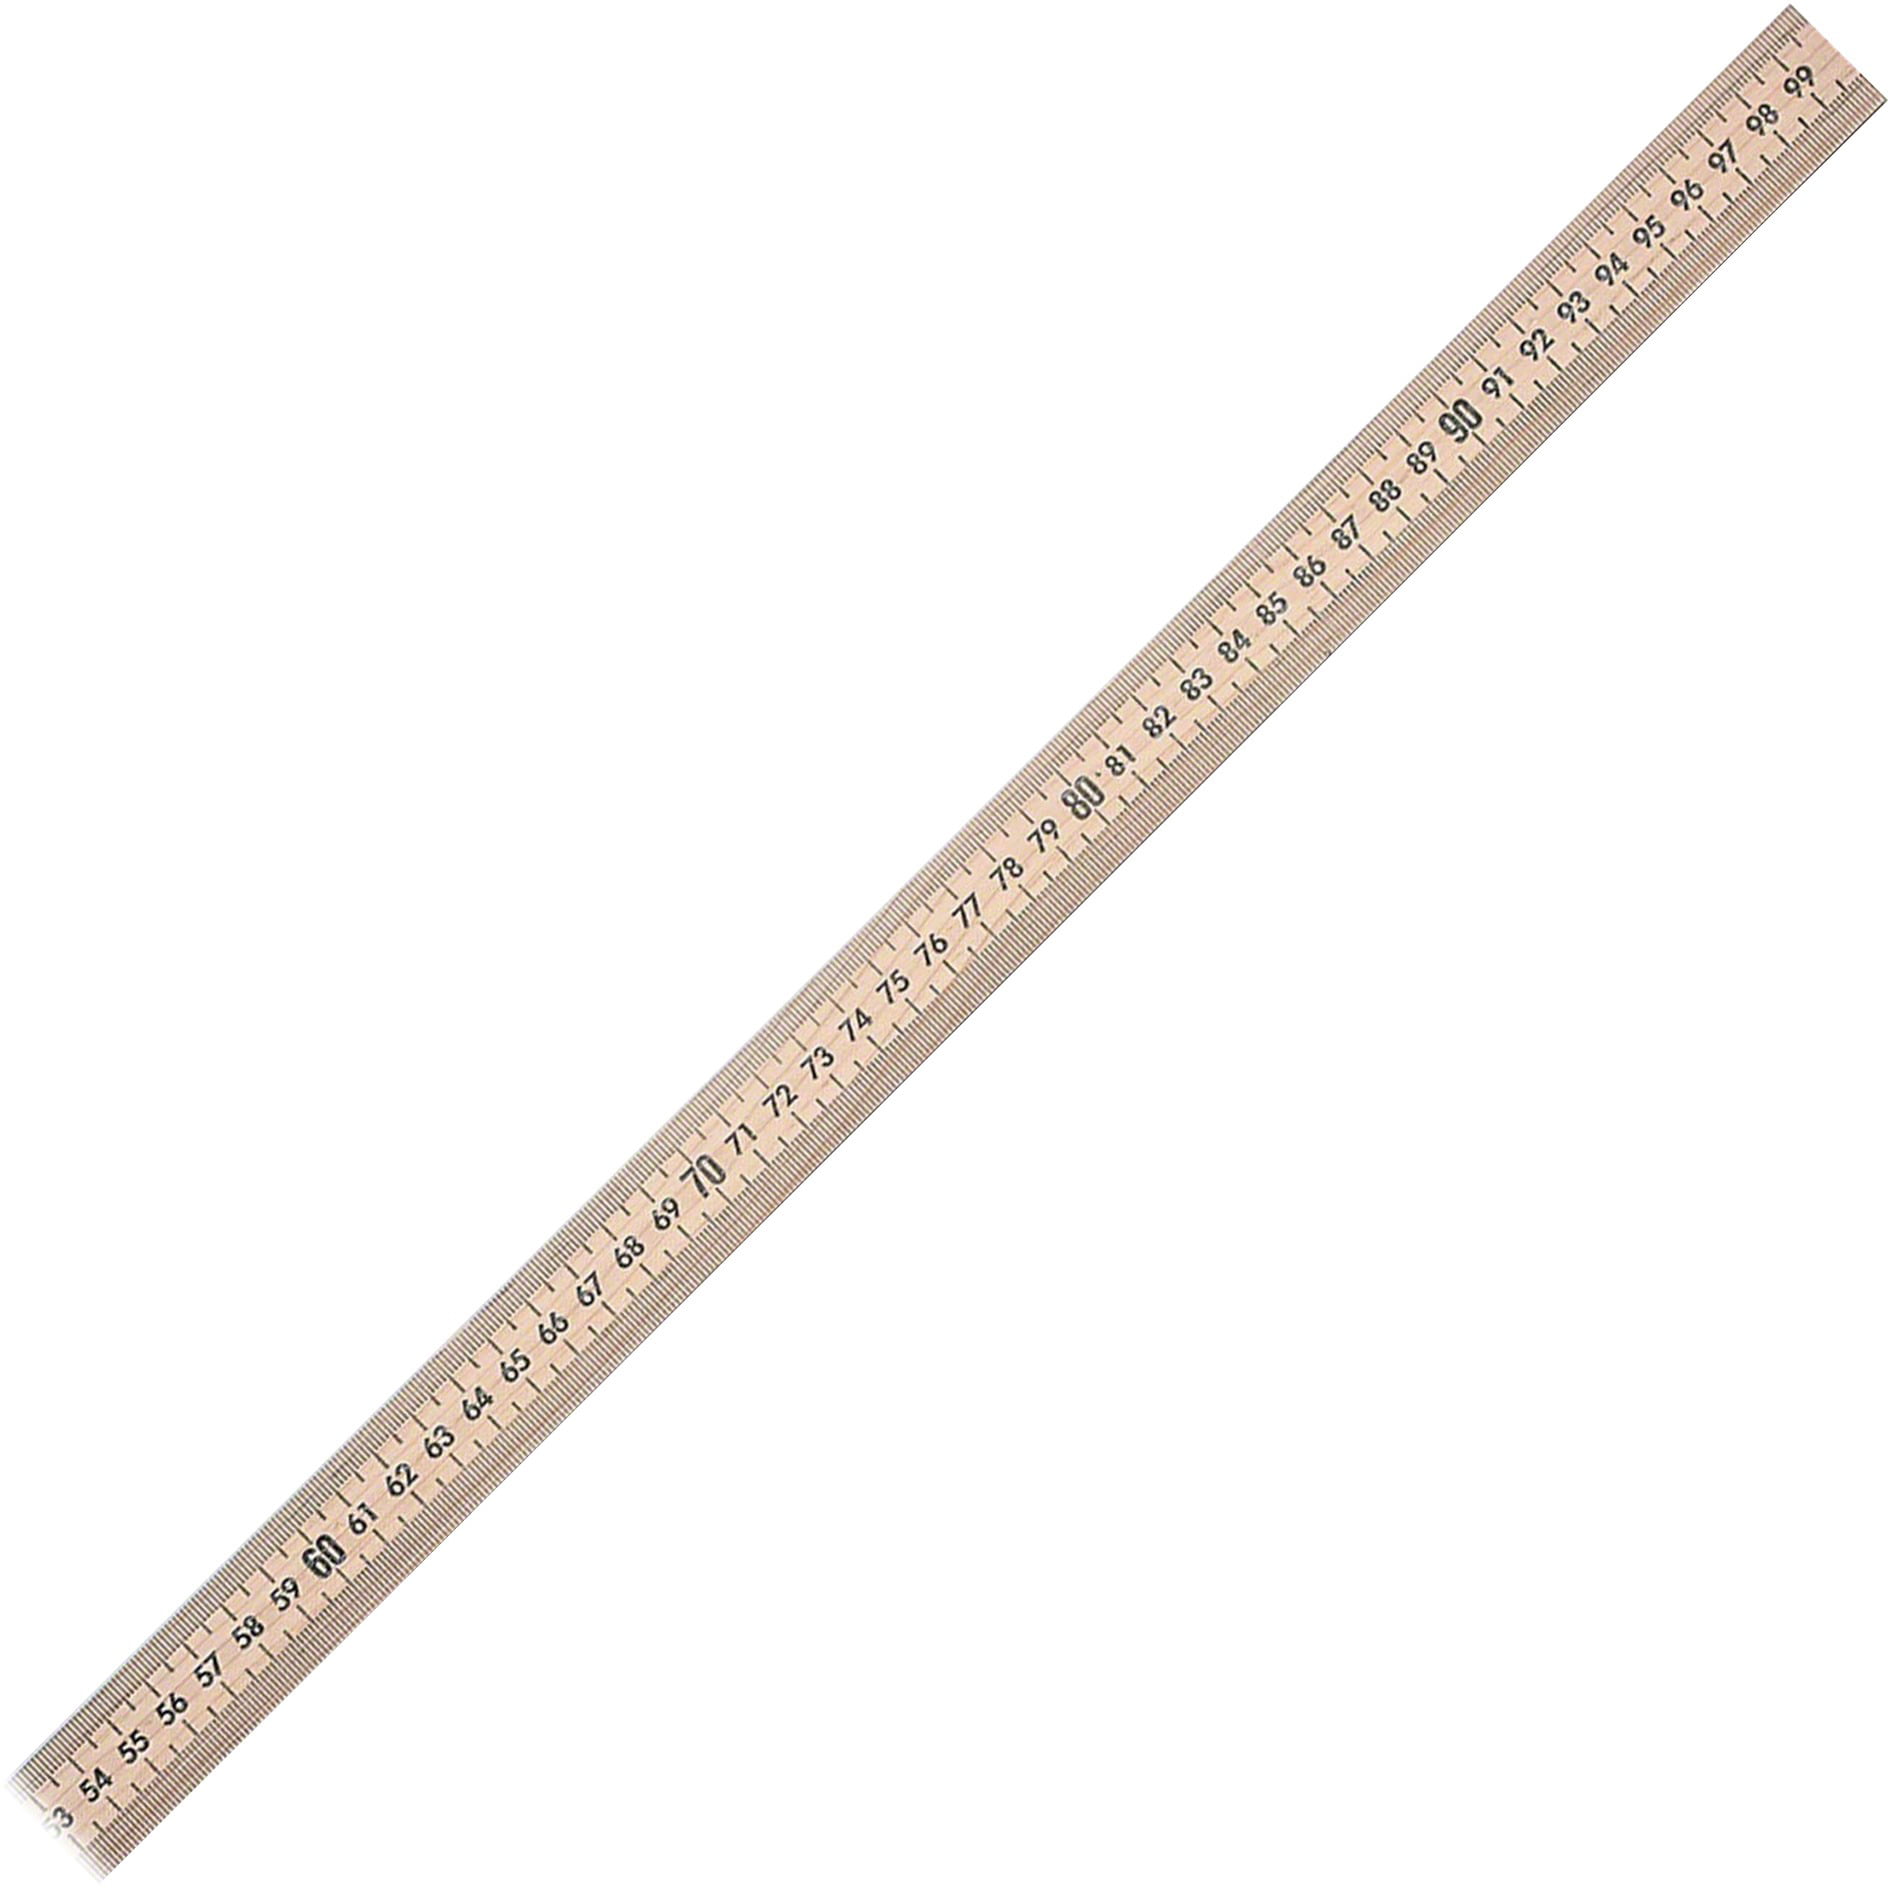 The Best Printable Meter Stick Brad Website